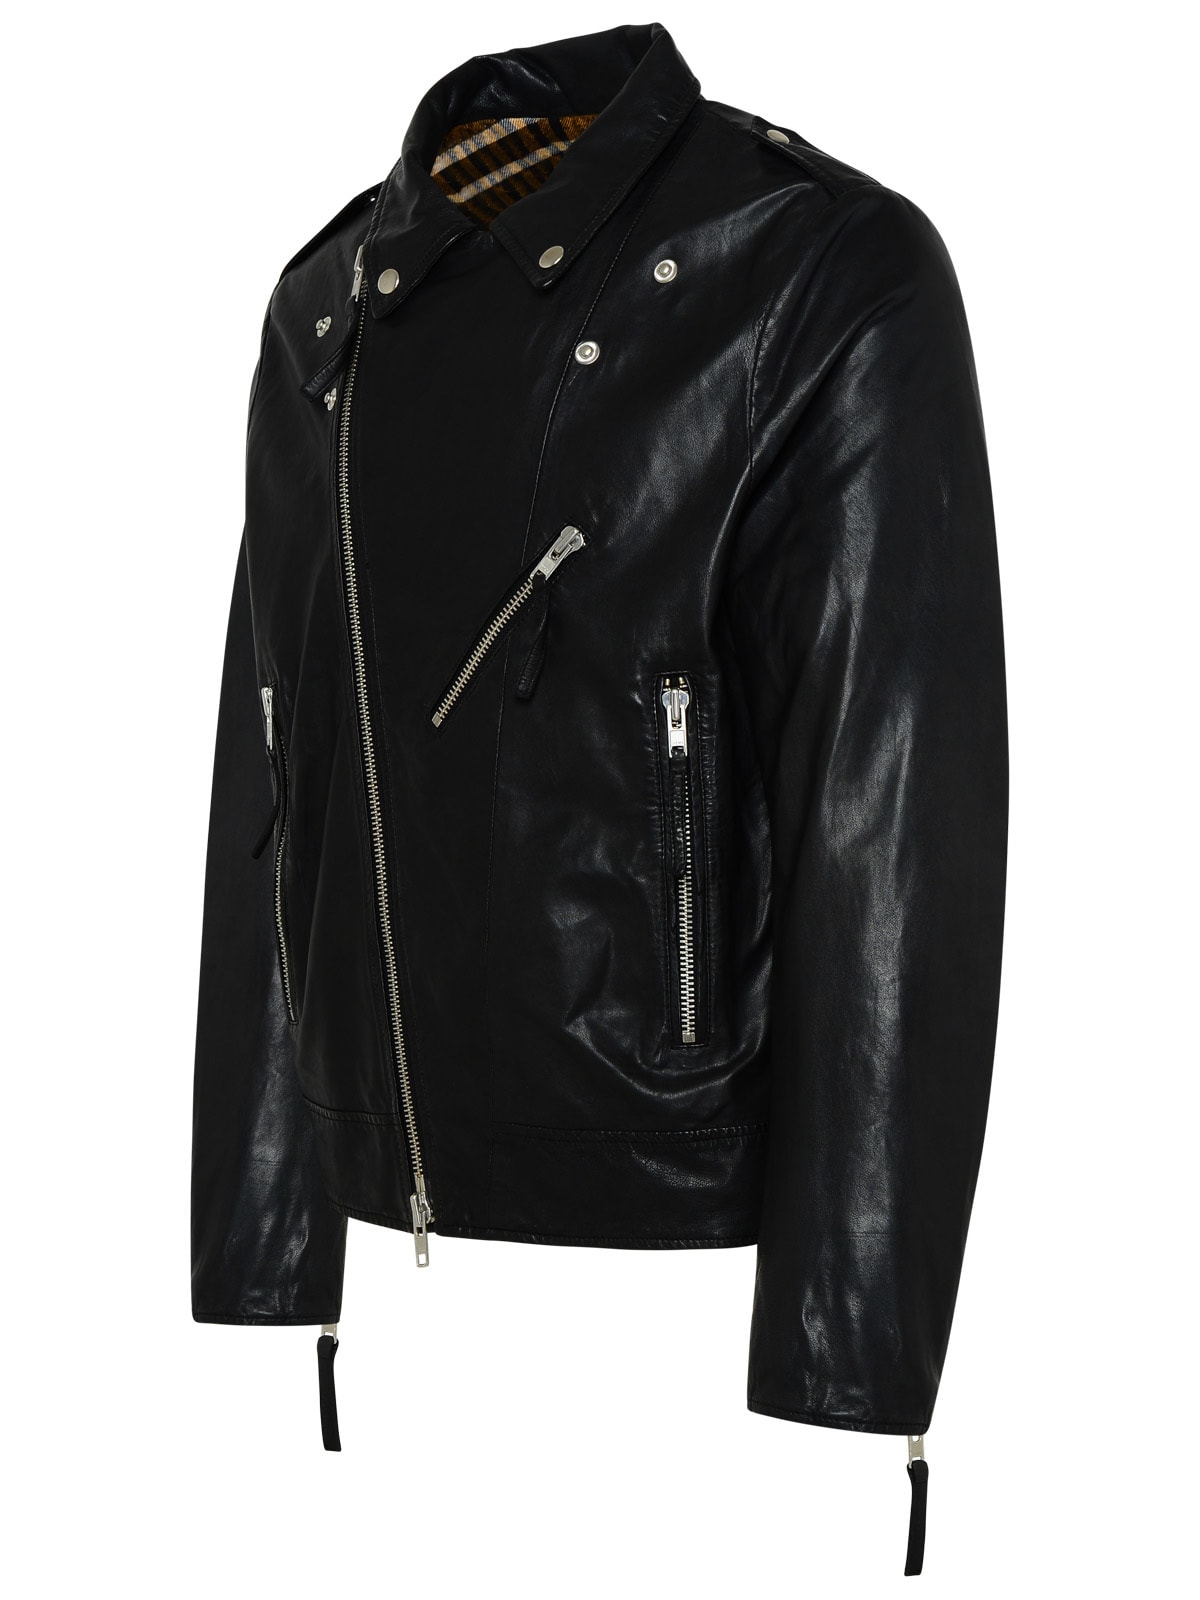 Shop Bully Black Genuine Leather Jacket